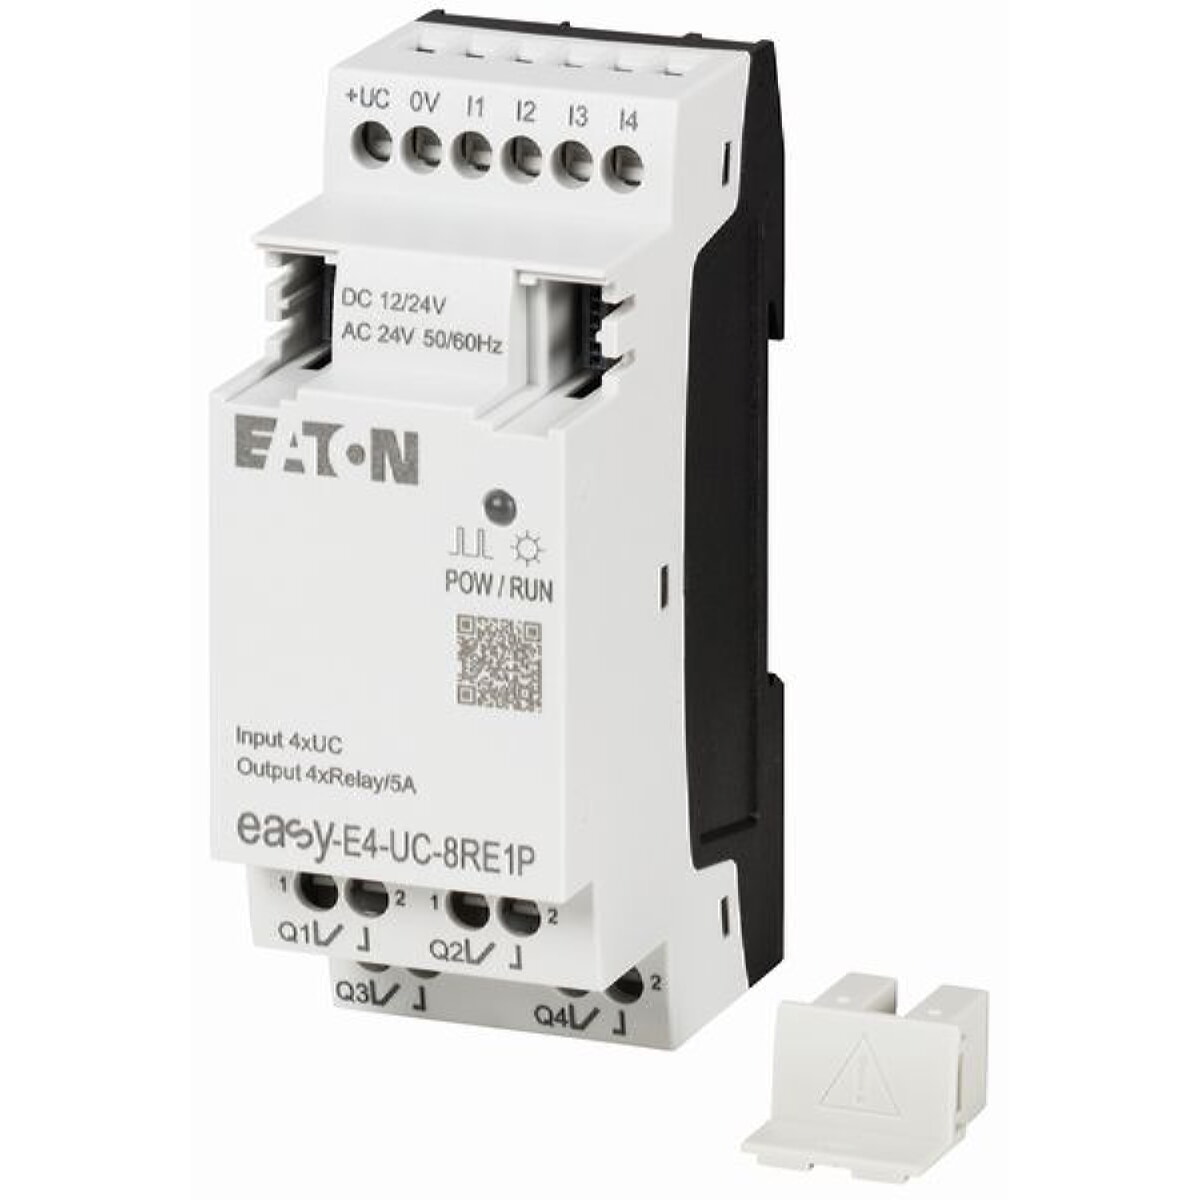 Eaton Electric Erweiterung EASY-E4-UC-8RE1P für easyE4